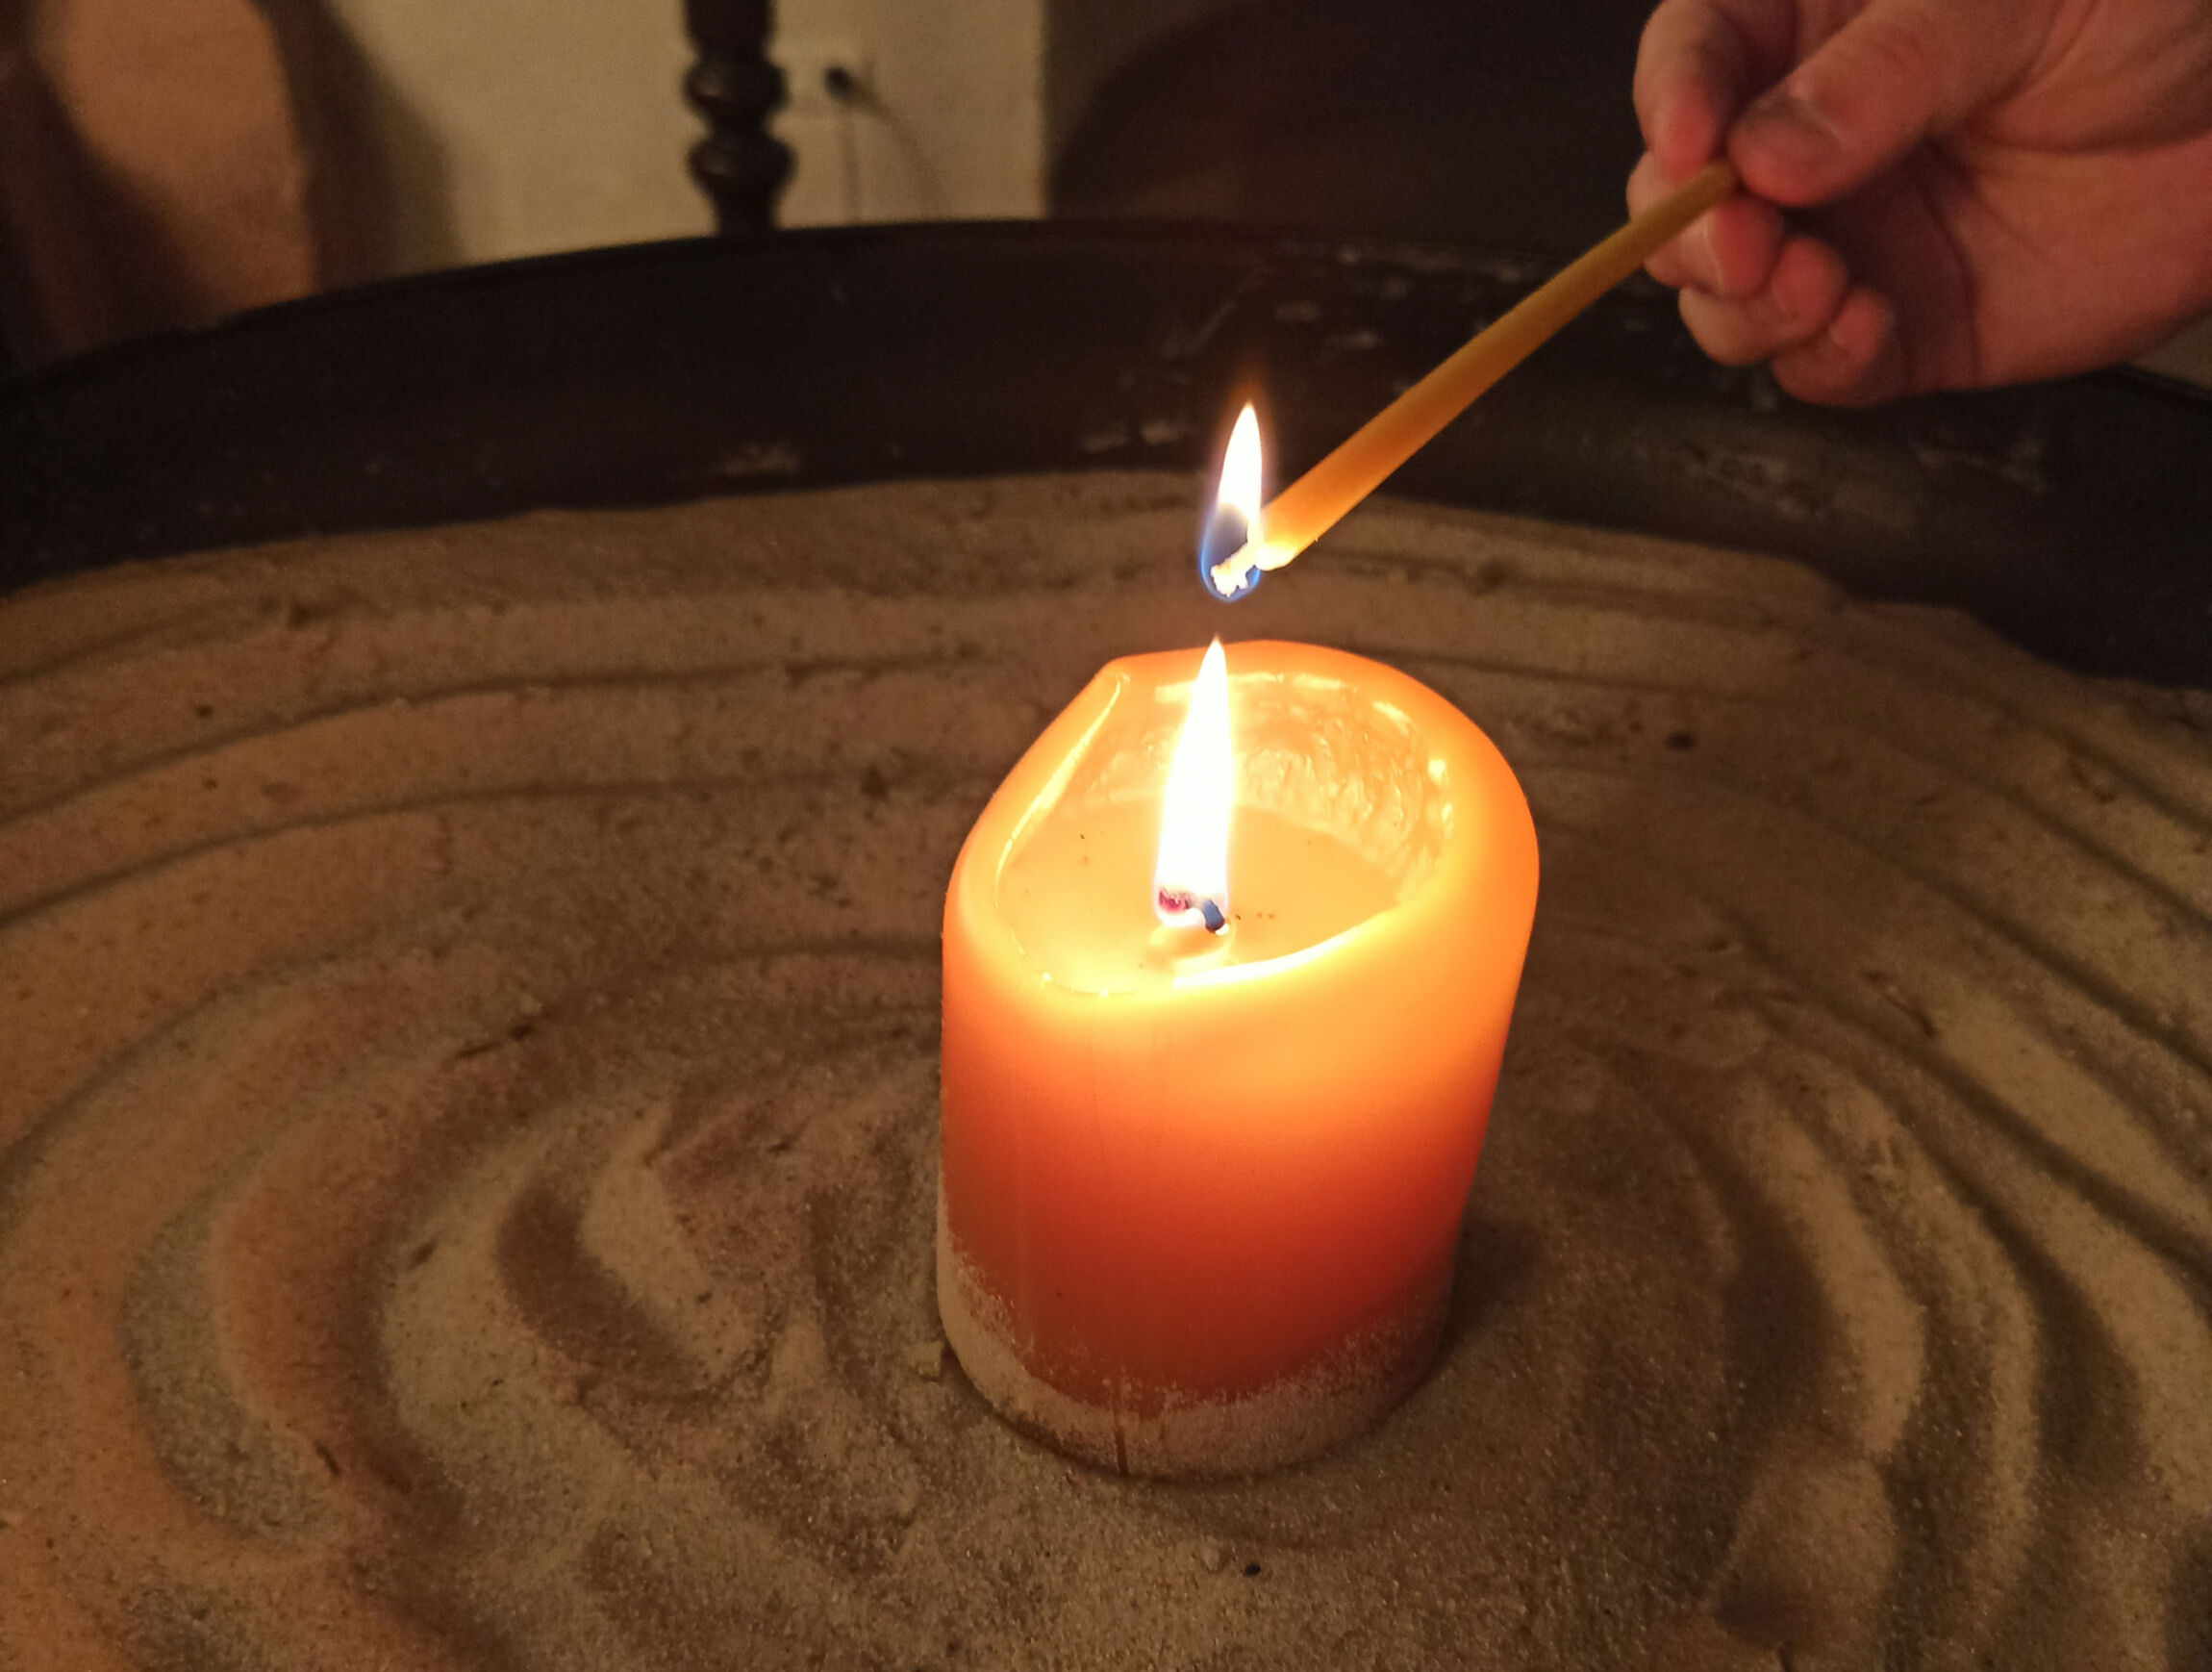 Kerzenbild für den Frieden